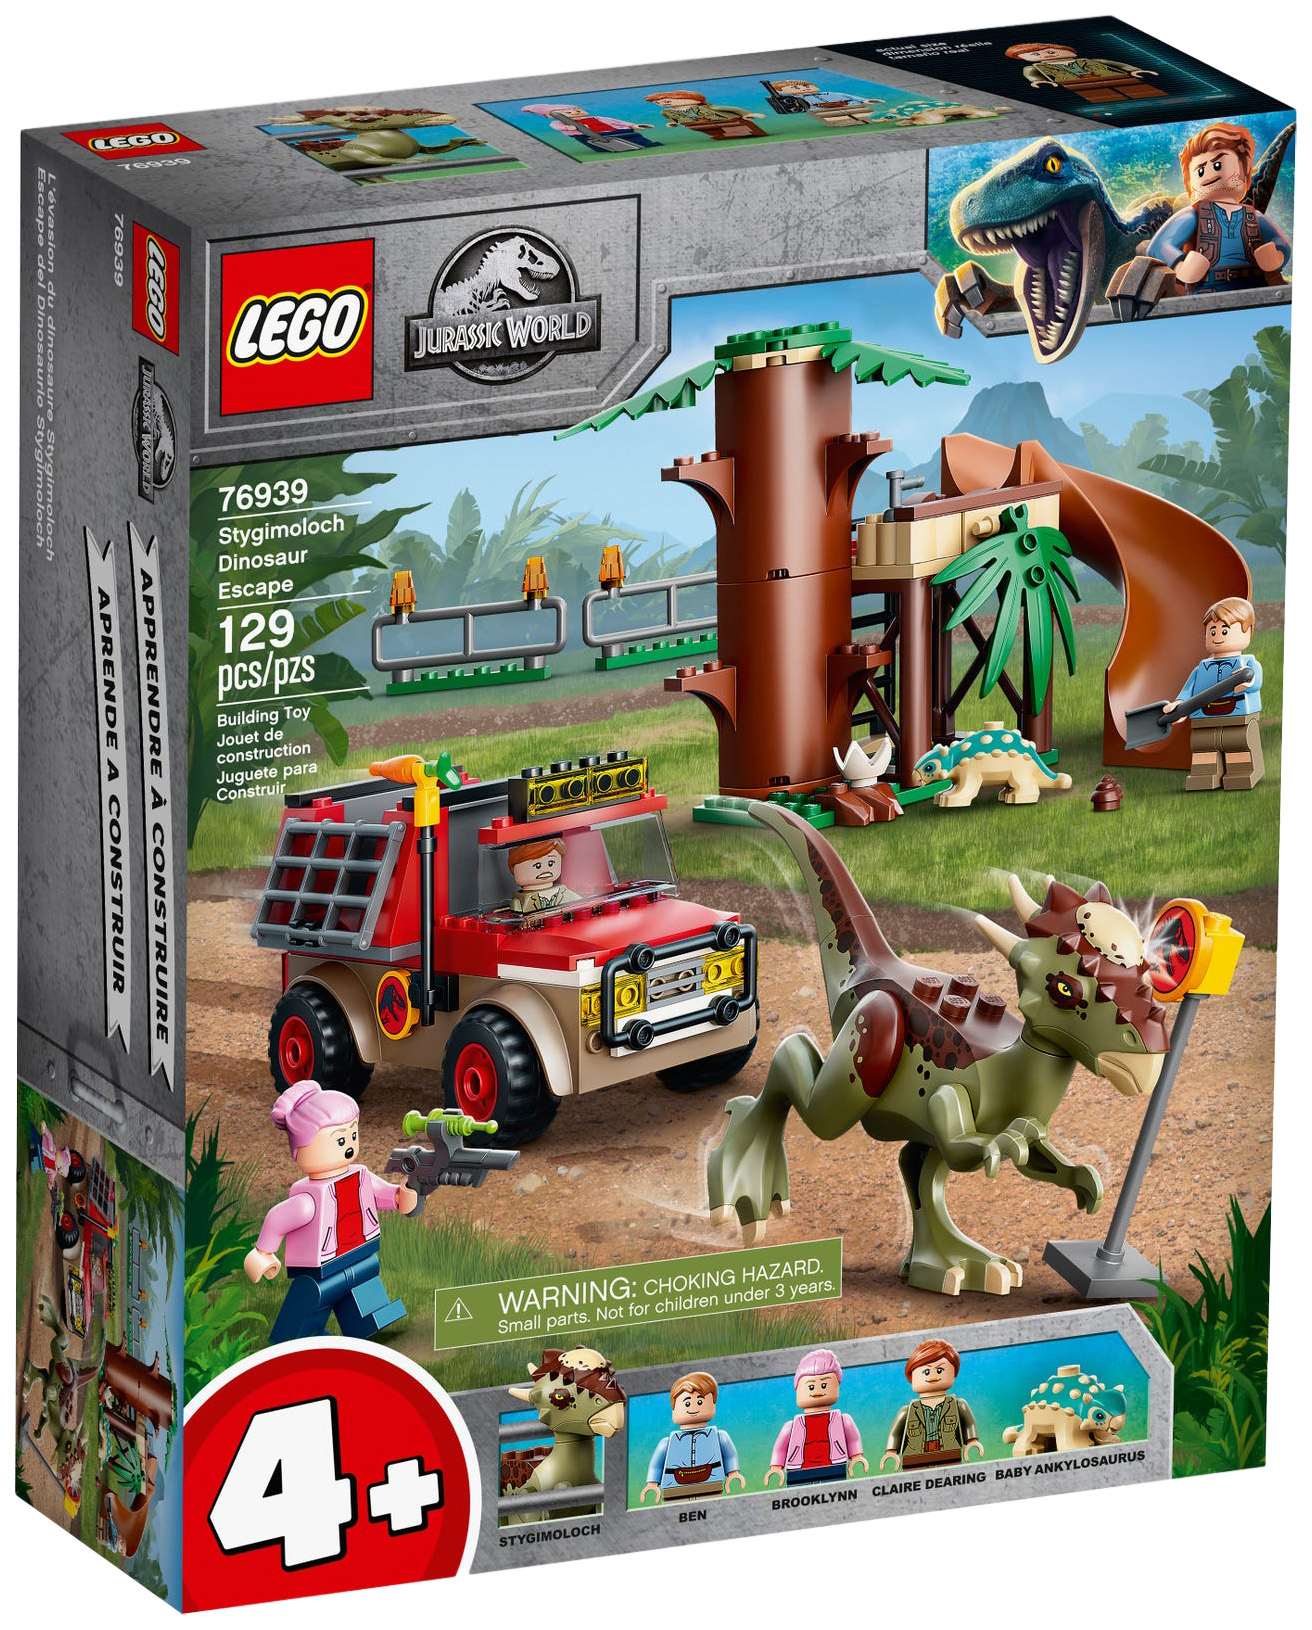 Конструктор LEGO Jurassic World 76939 Побег стигимолоха lego jurassic world нападение трицератопса